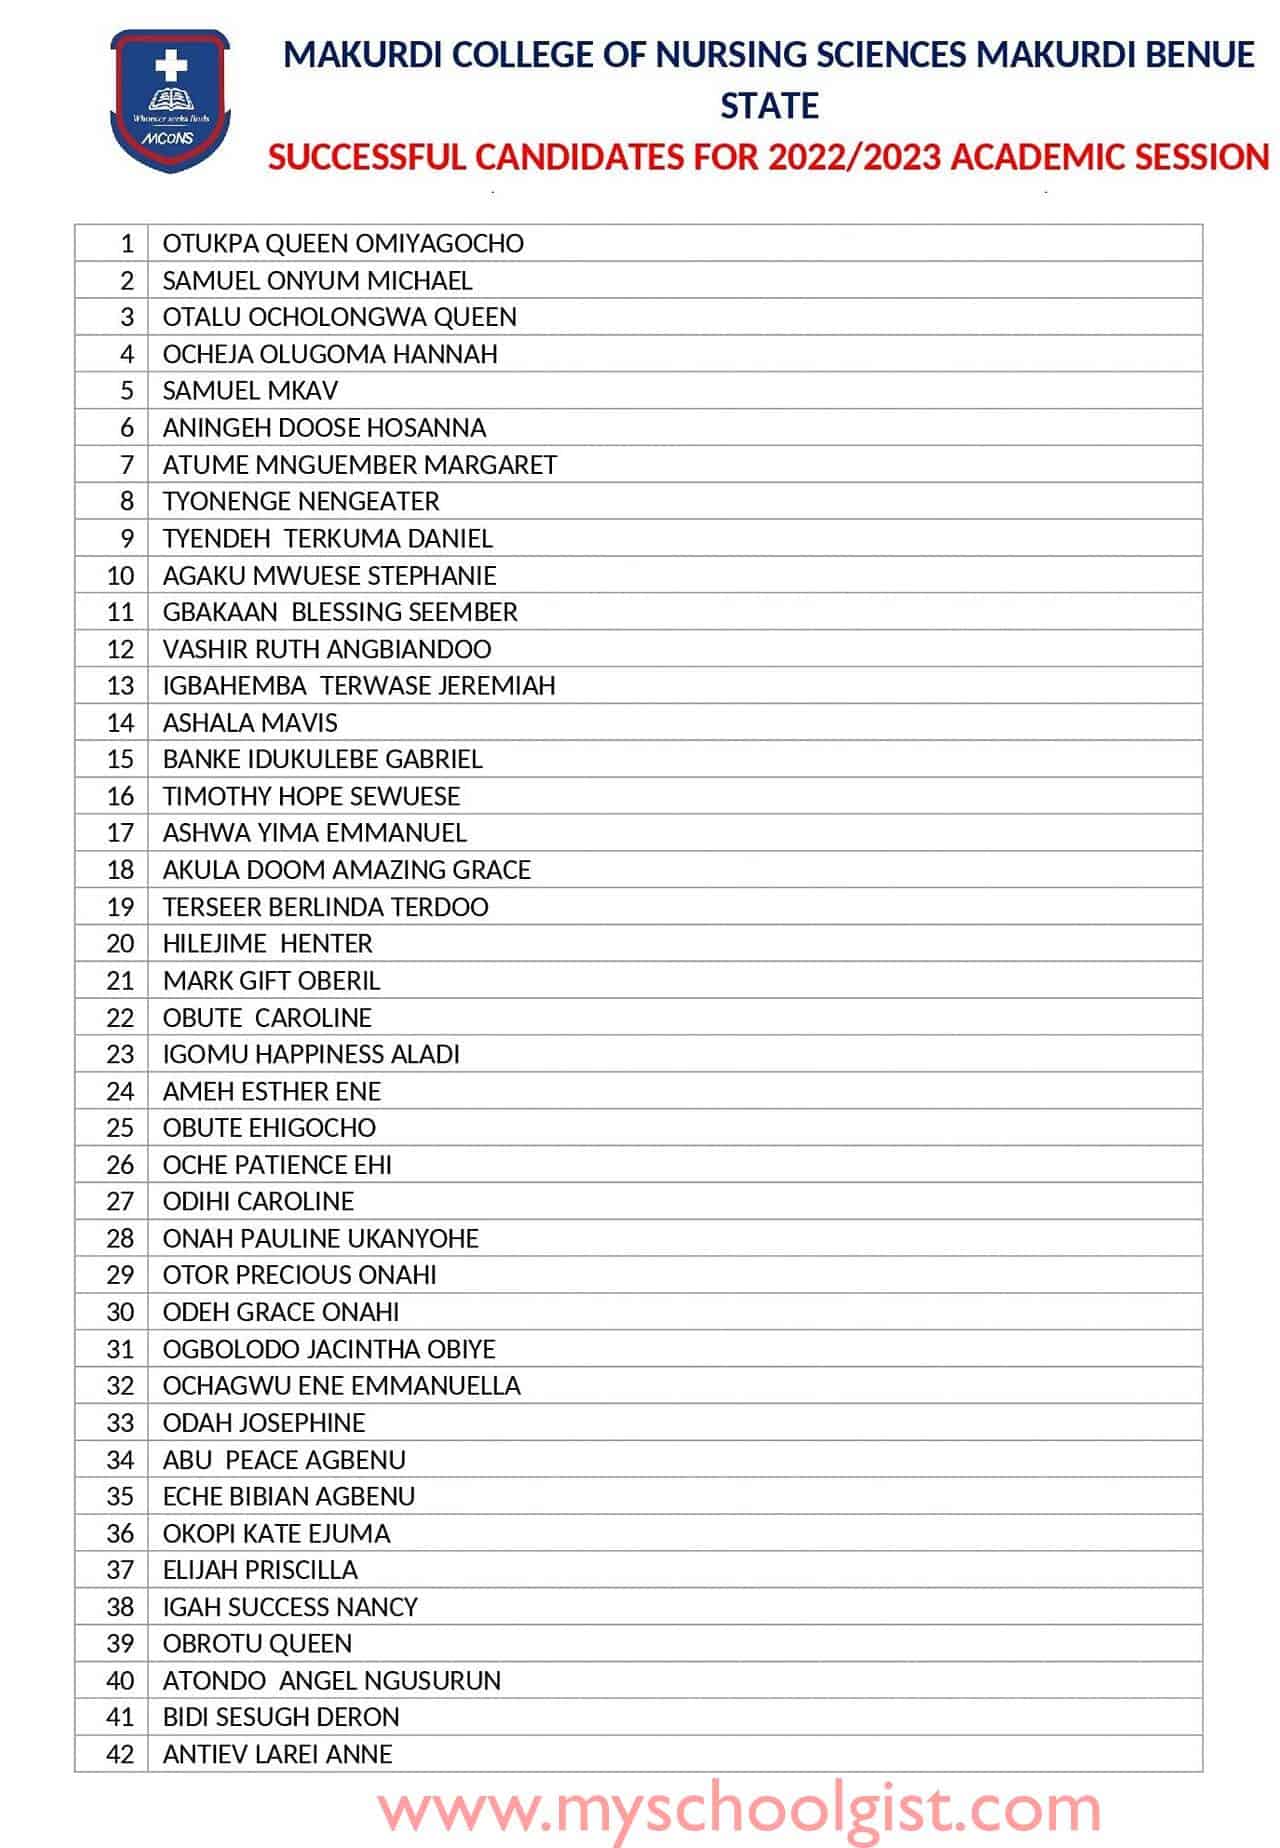 Makurdi College of Nursing Sciences Admission List 2022-2023